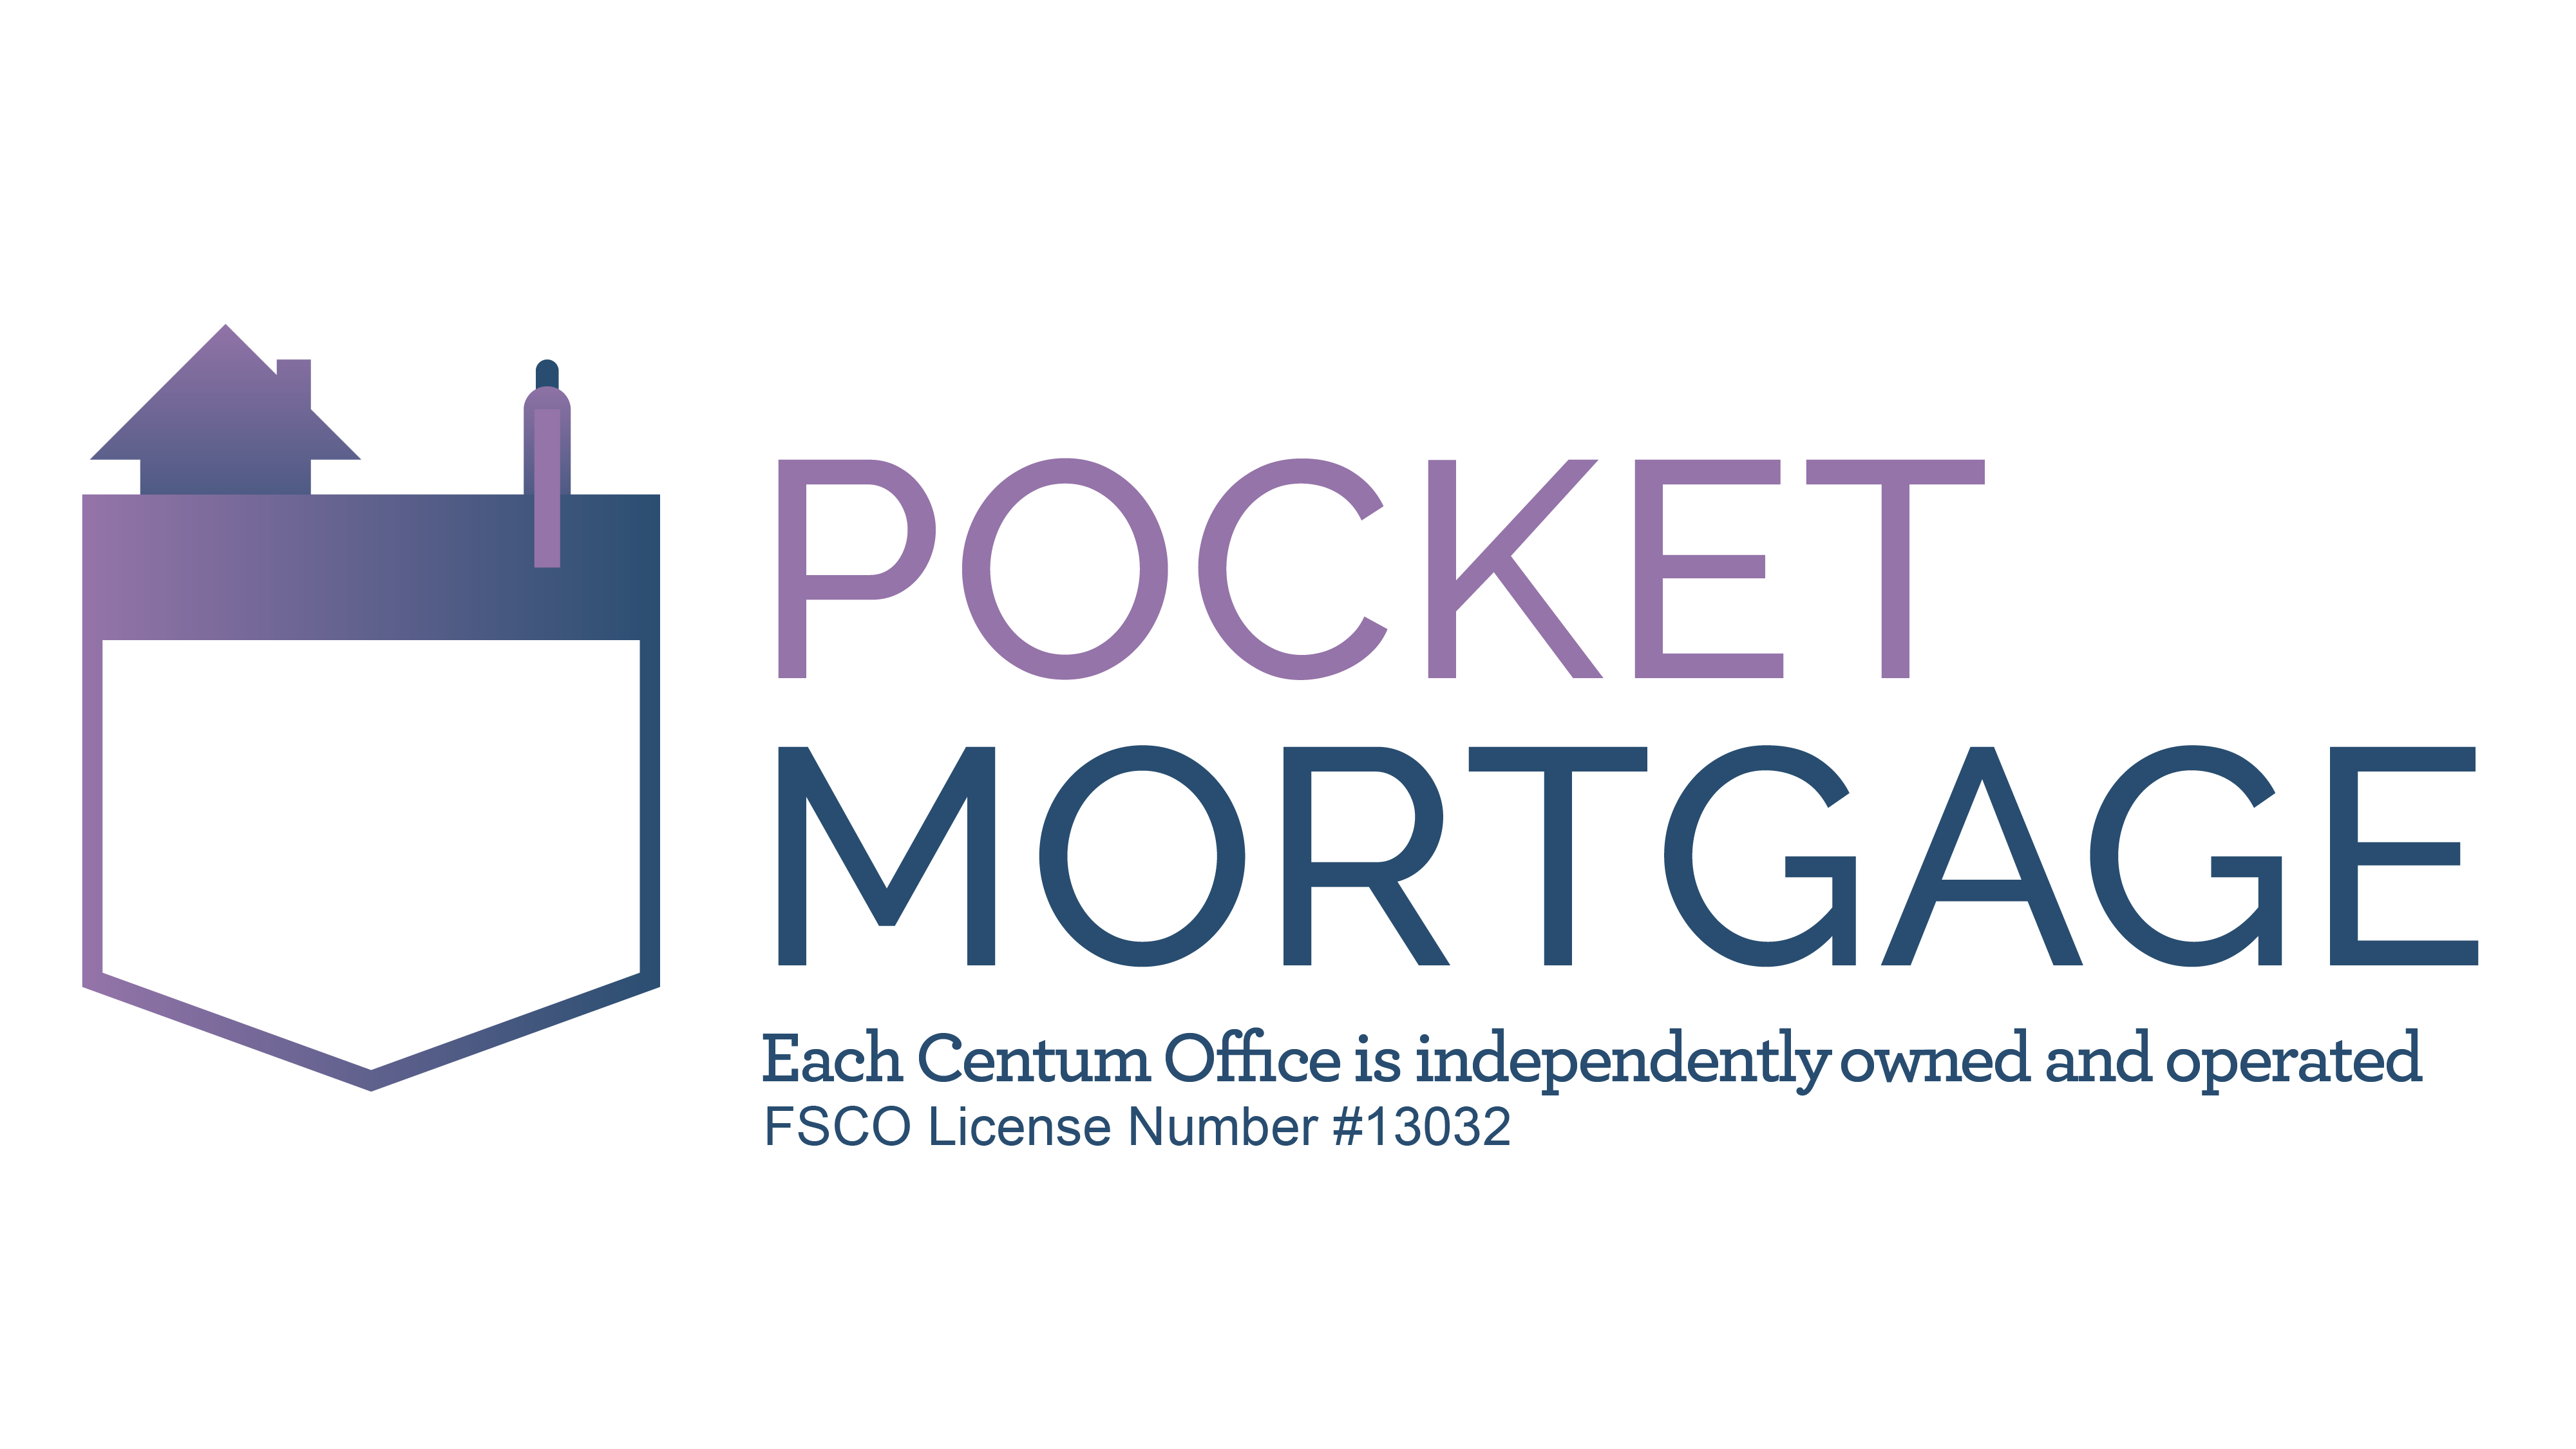 Pocket Mortgage